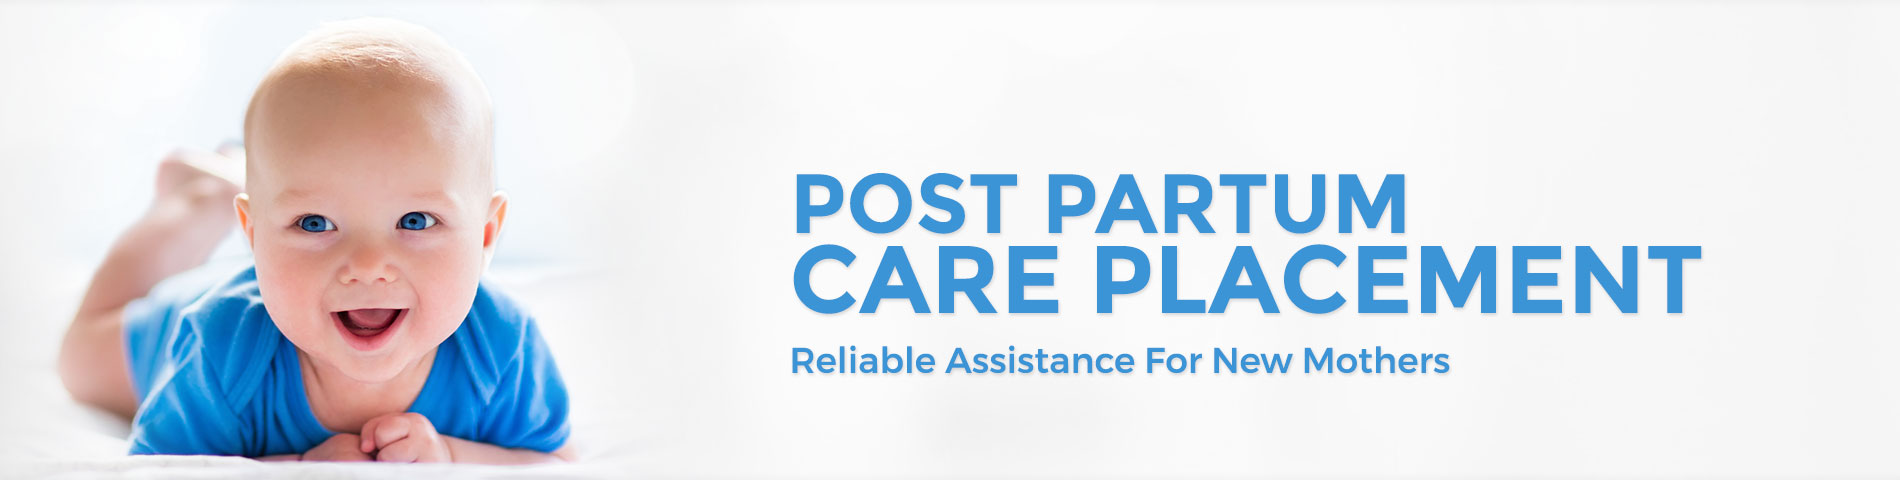 Post Partum Care Placement